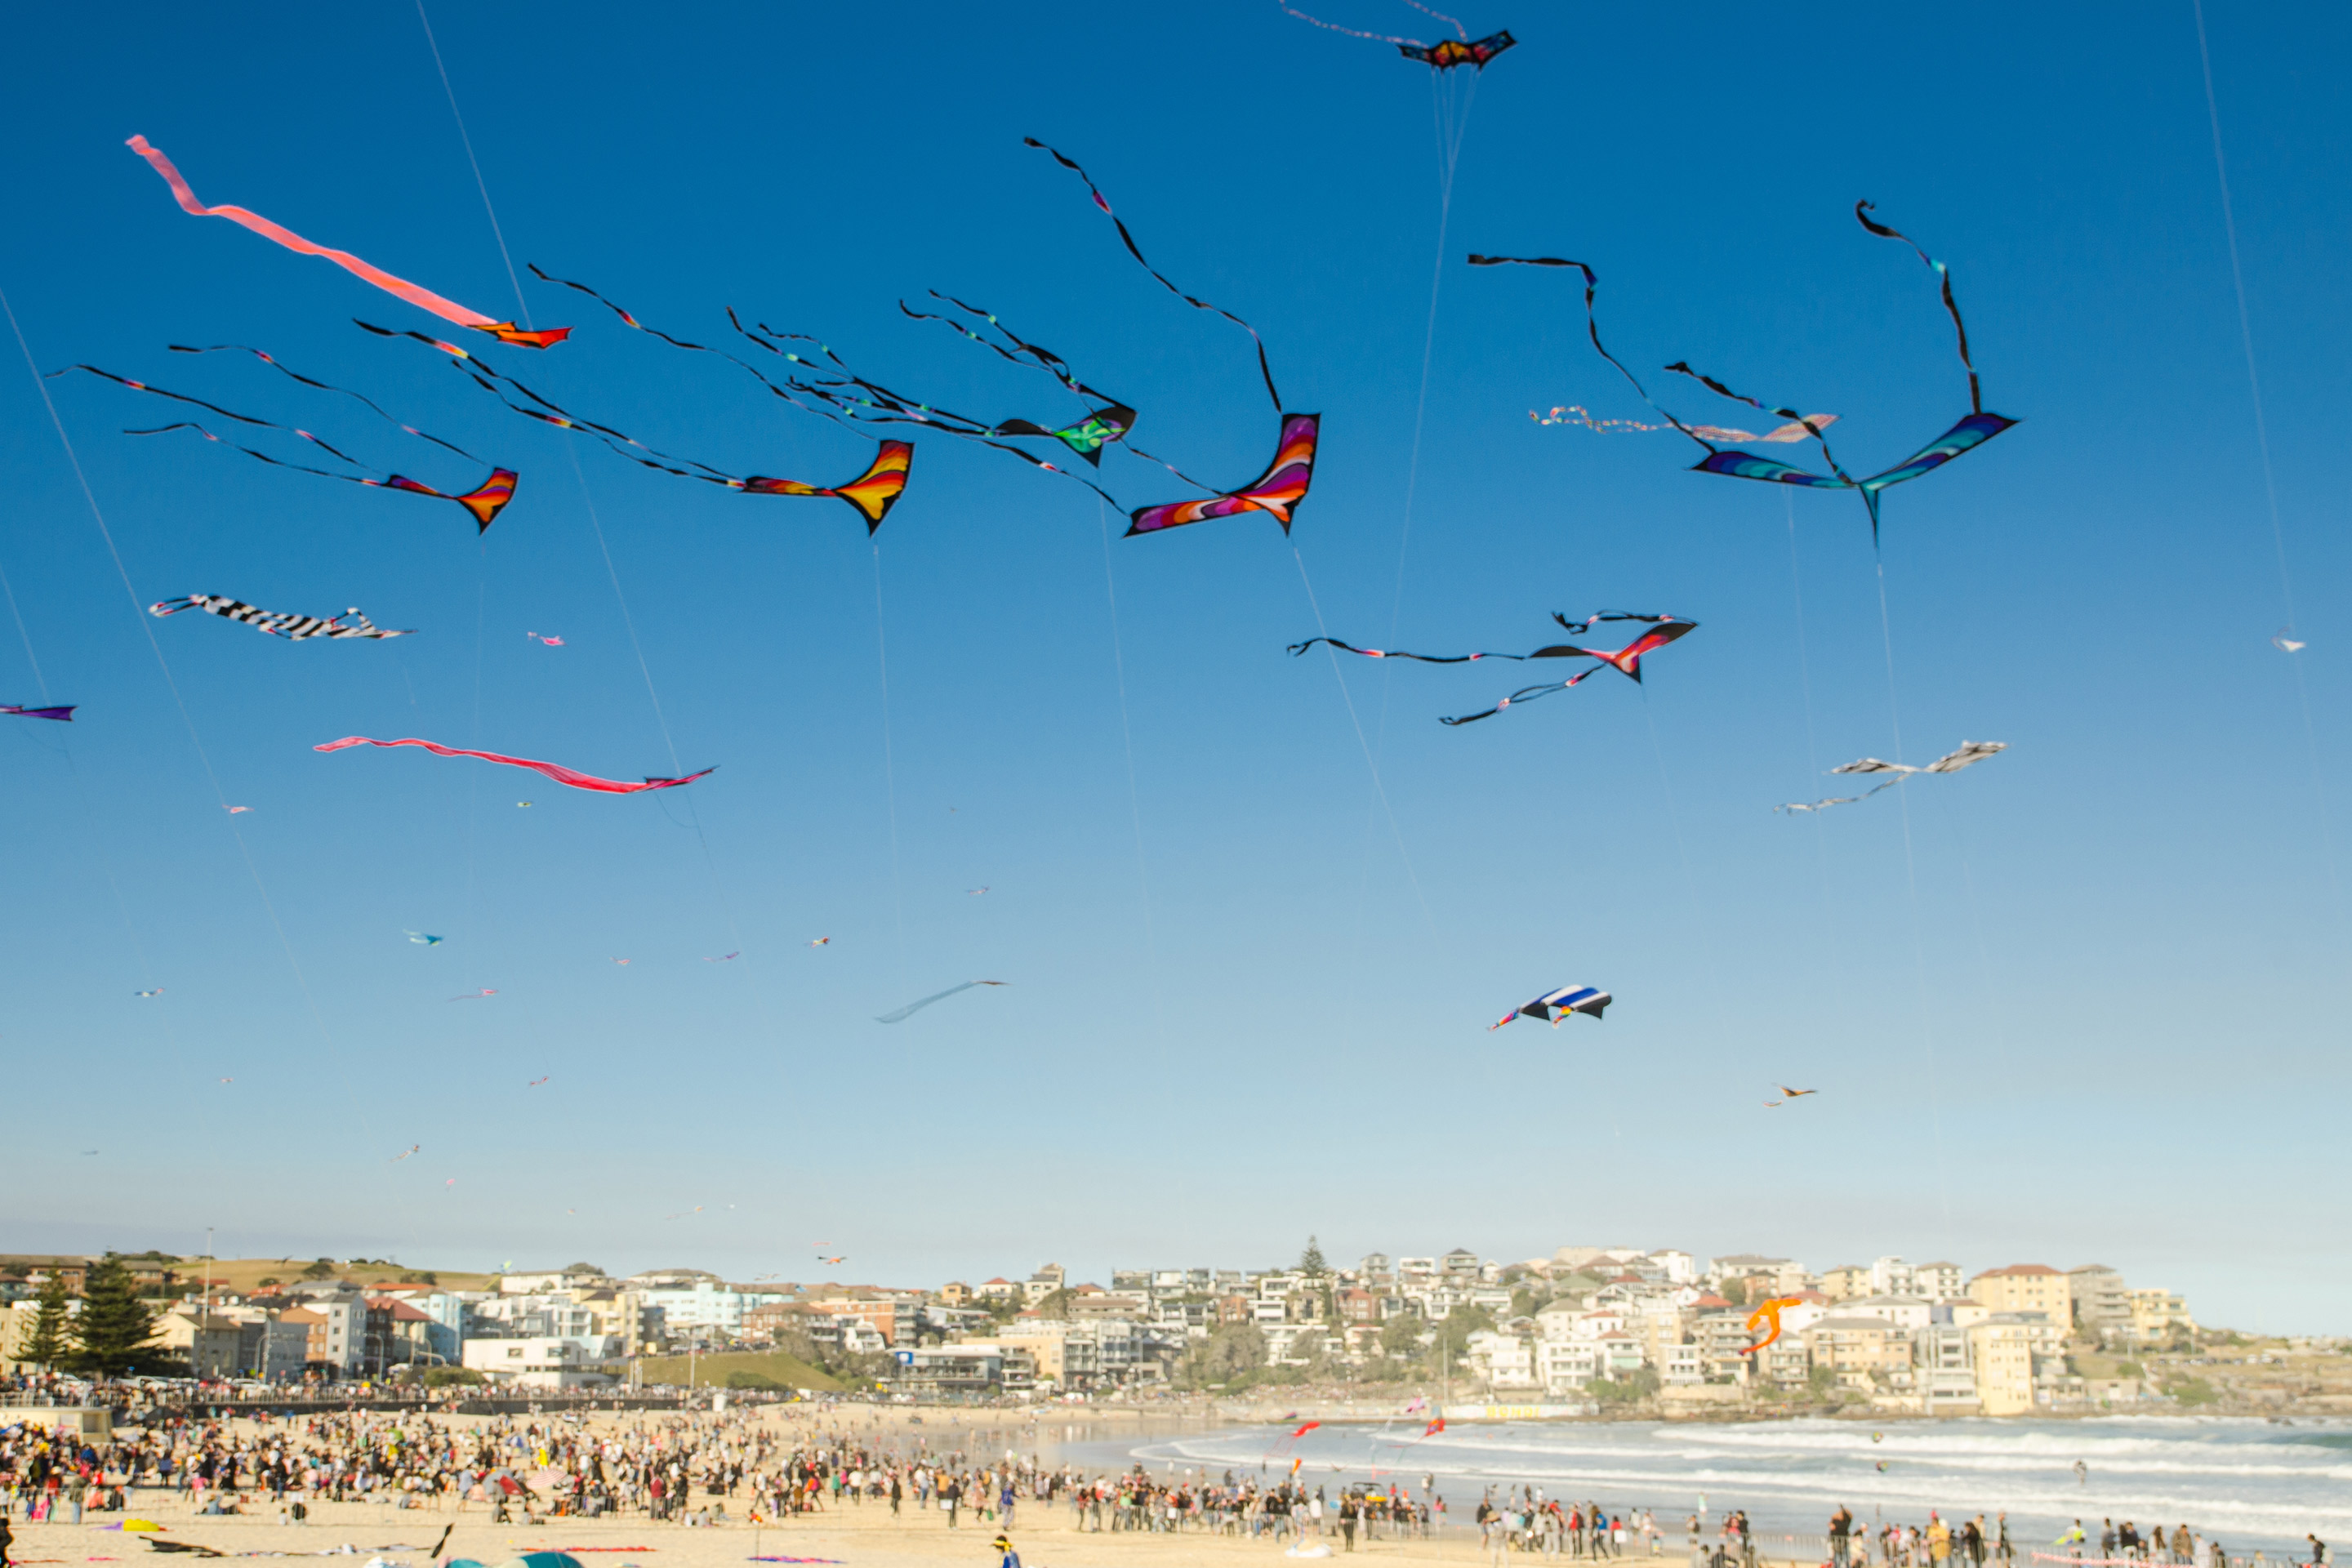 Sky Full Kites Kite Flying Festival Bondi Beach Sydney Australia